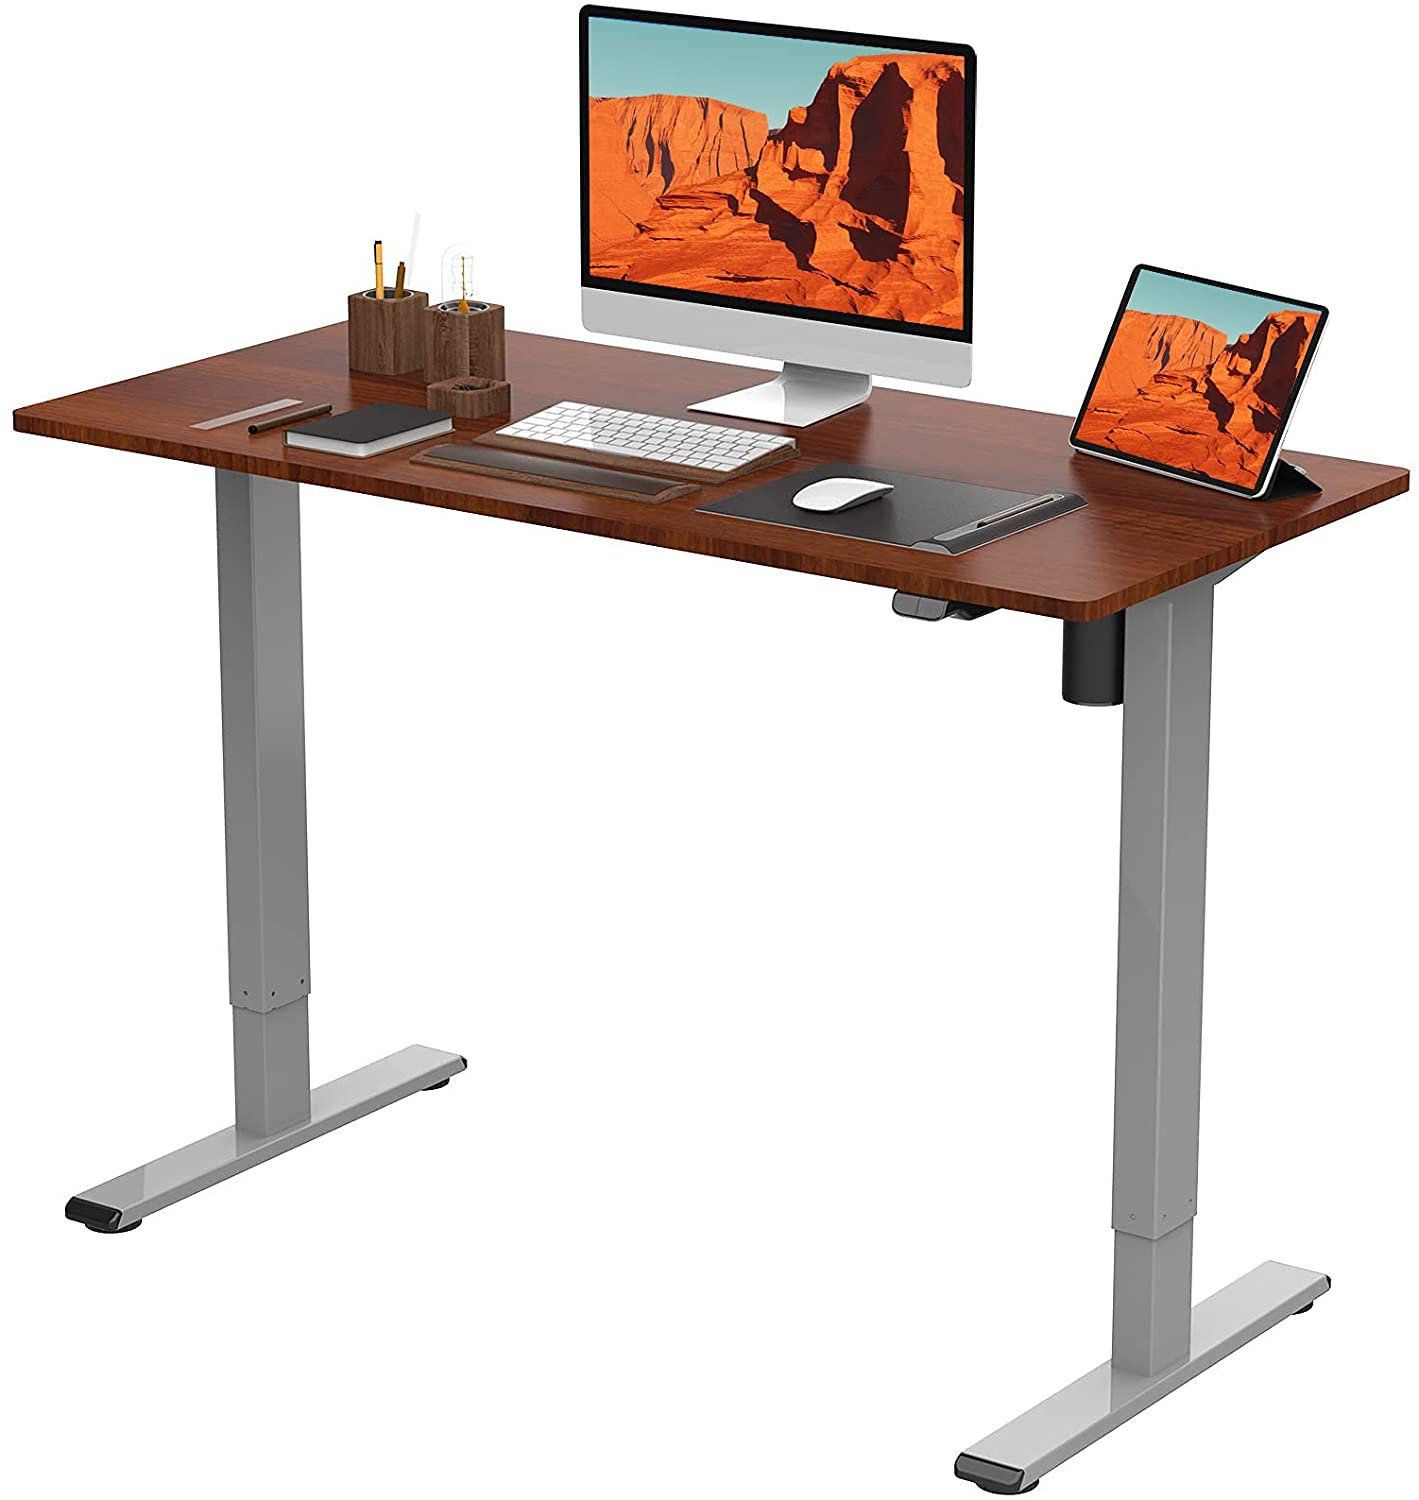 Flexispot Standing Desk 48x24 $189.99 at Amazon